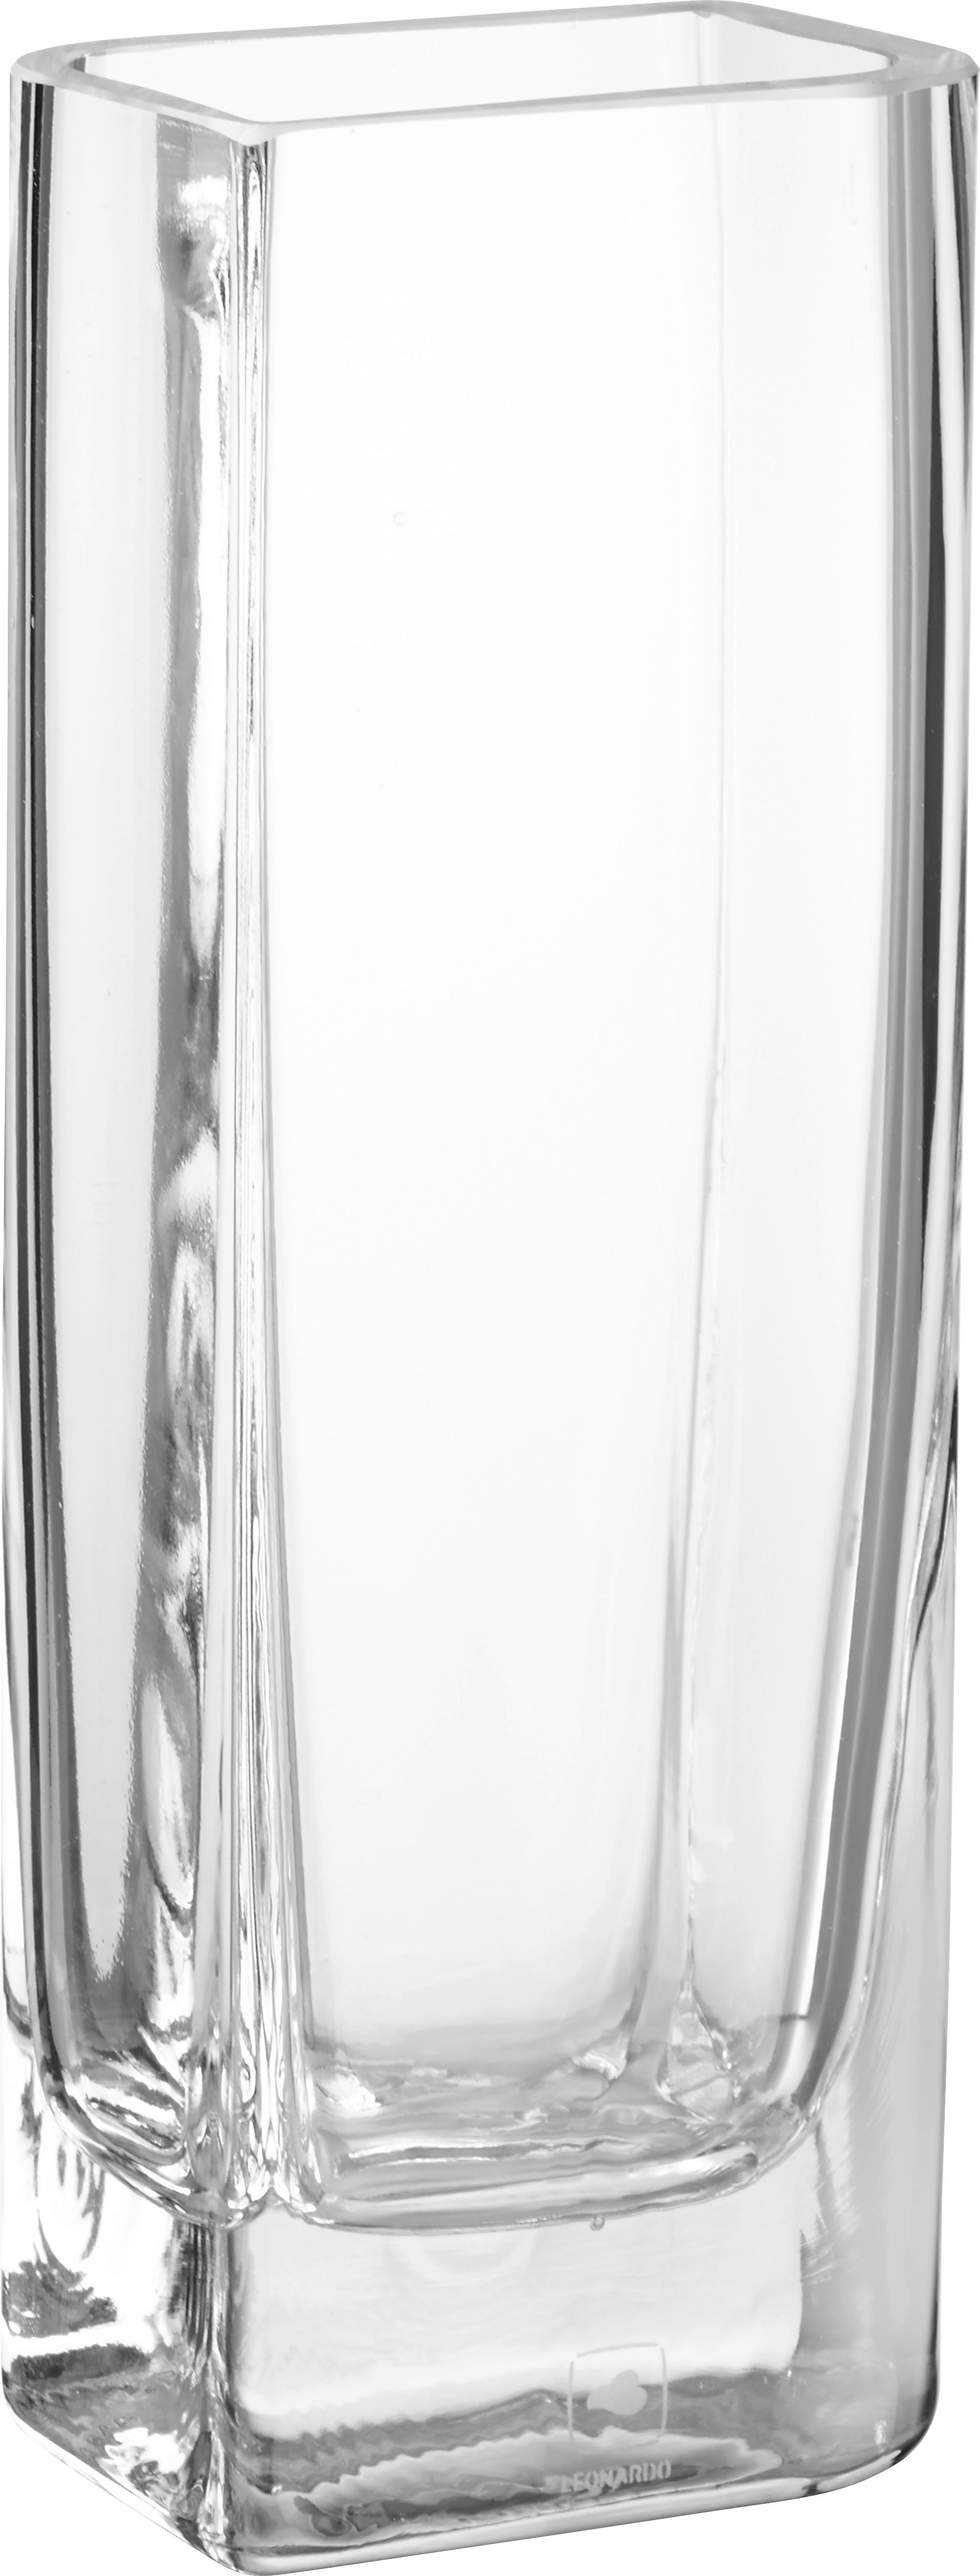 VASE 20 cm  - Klar, Basics, Glas (8,00/20,00/8,00cm) - Leonardo